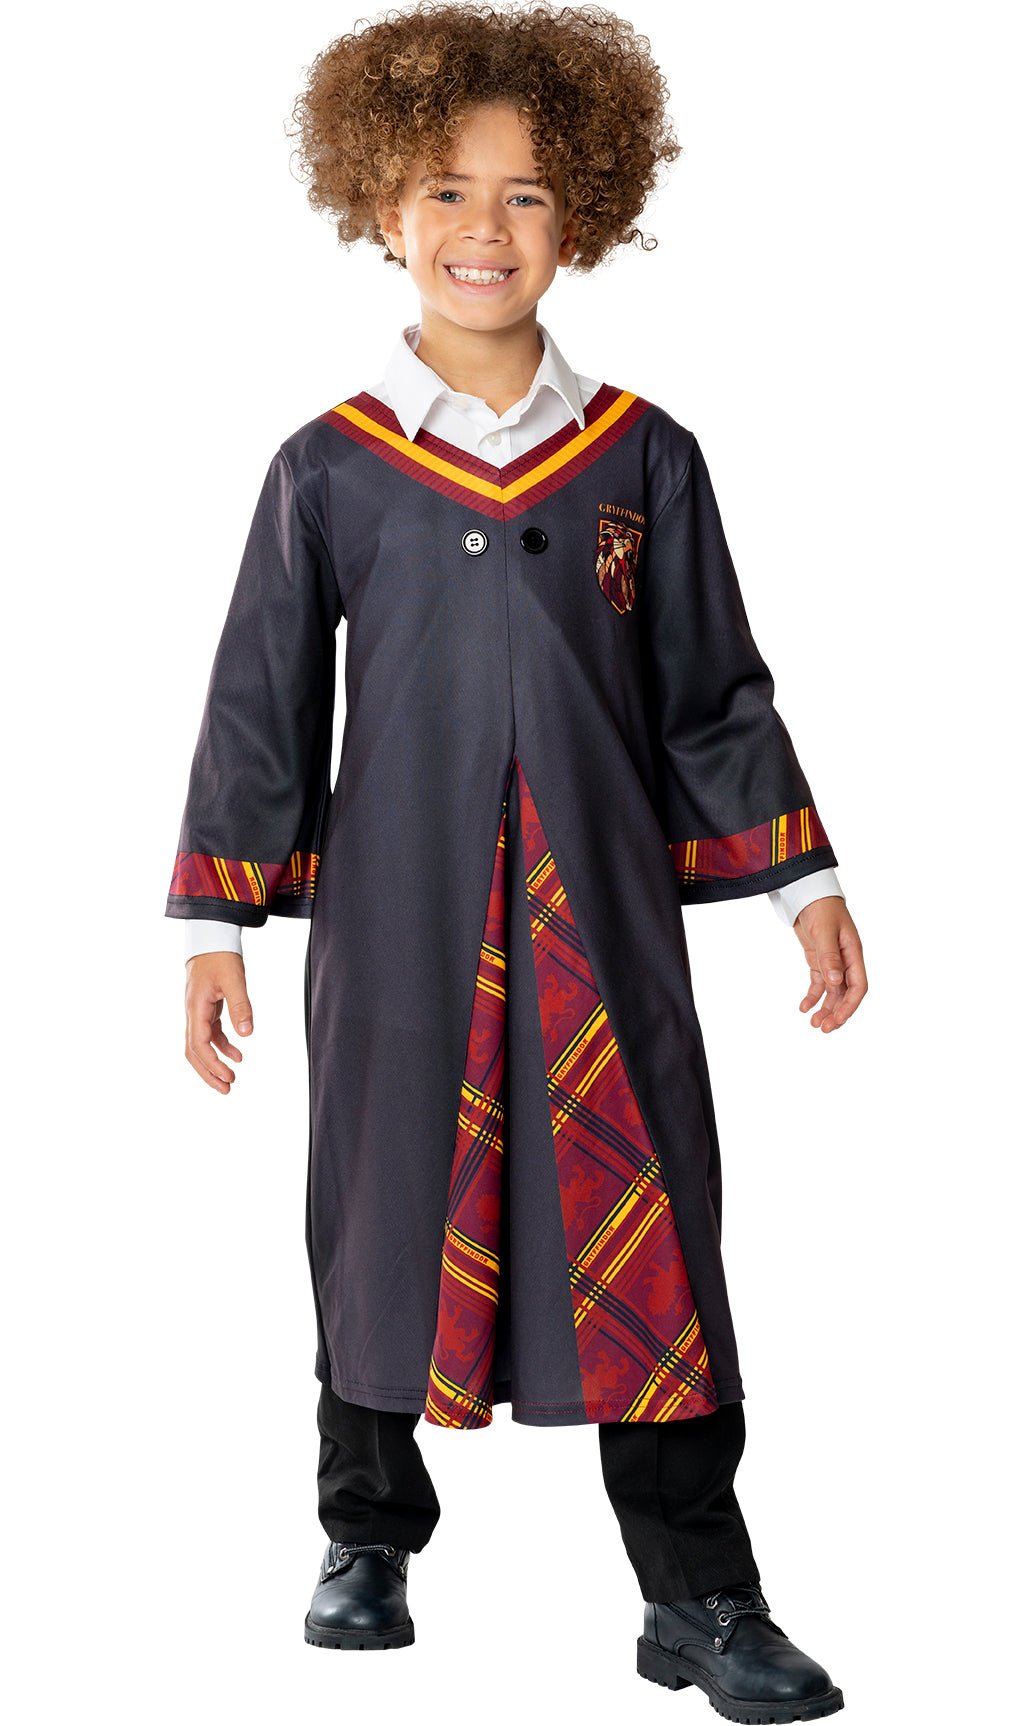 Costume di Harry Potter™ Grifondoro infantile